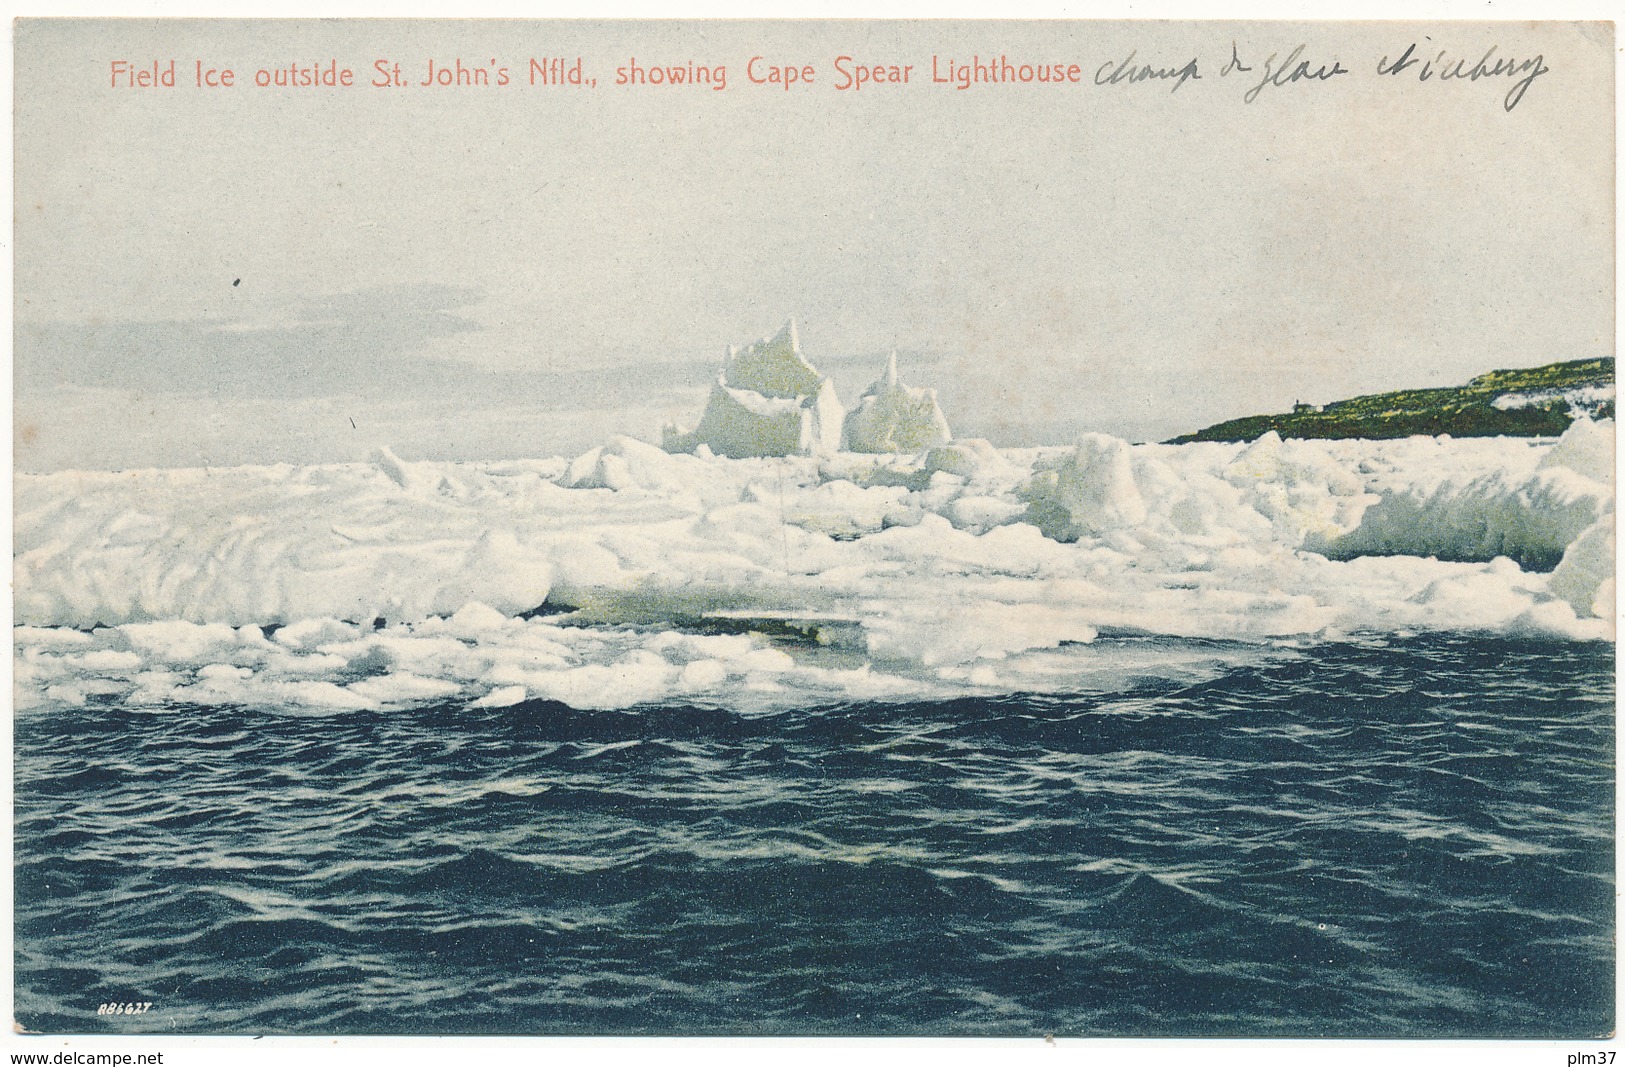 NEWFOUNDLAND, Terre Neuve - Field Ice Showing Cape Spear Lighthouse - Ayre & Sons, St John's - St. John's